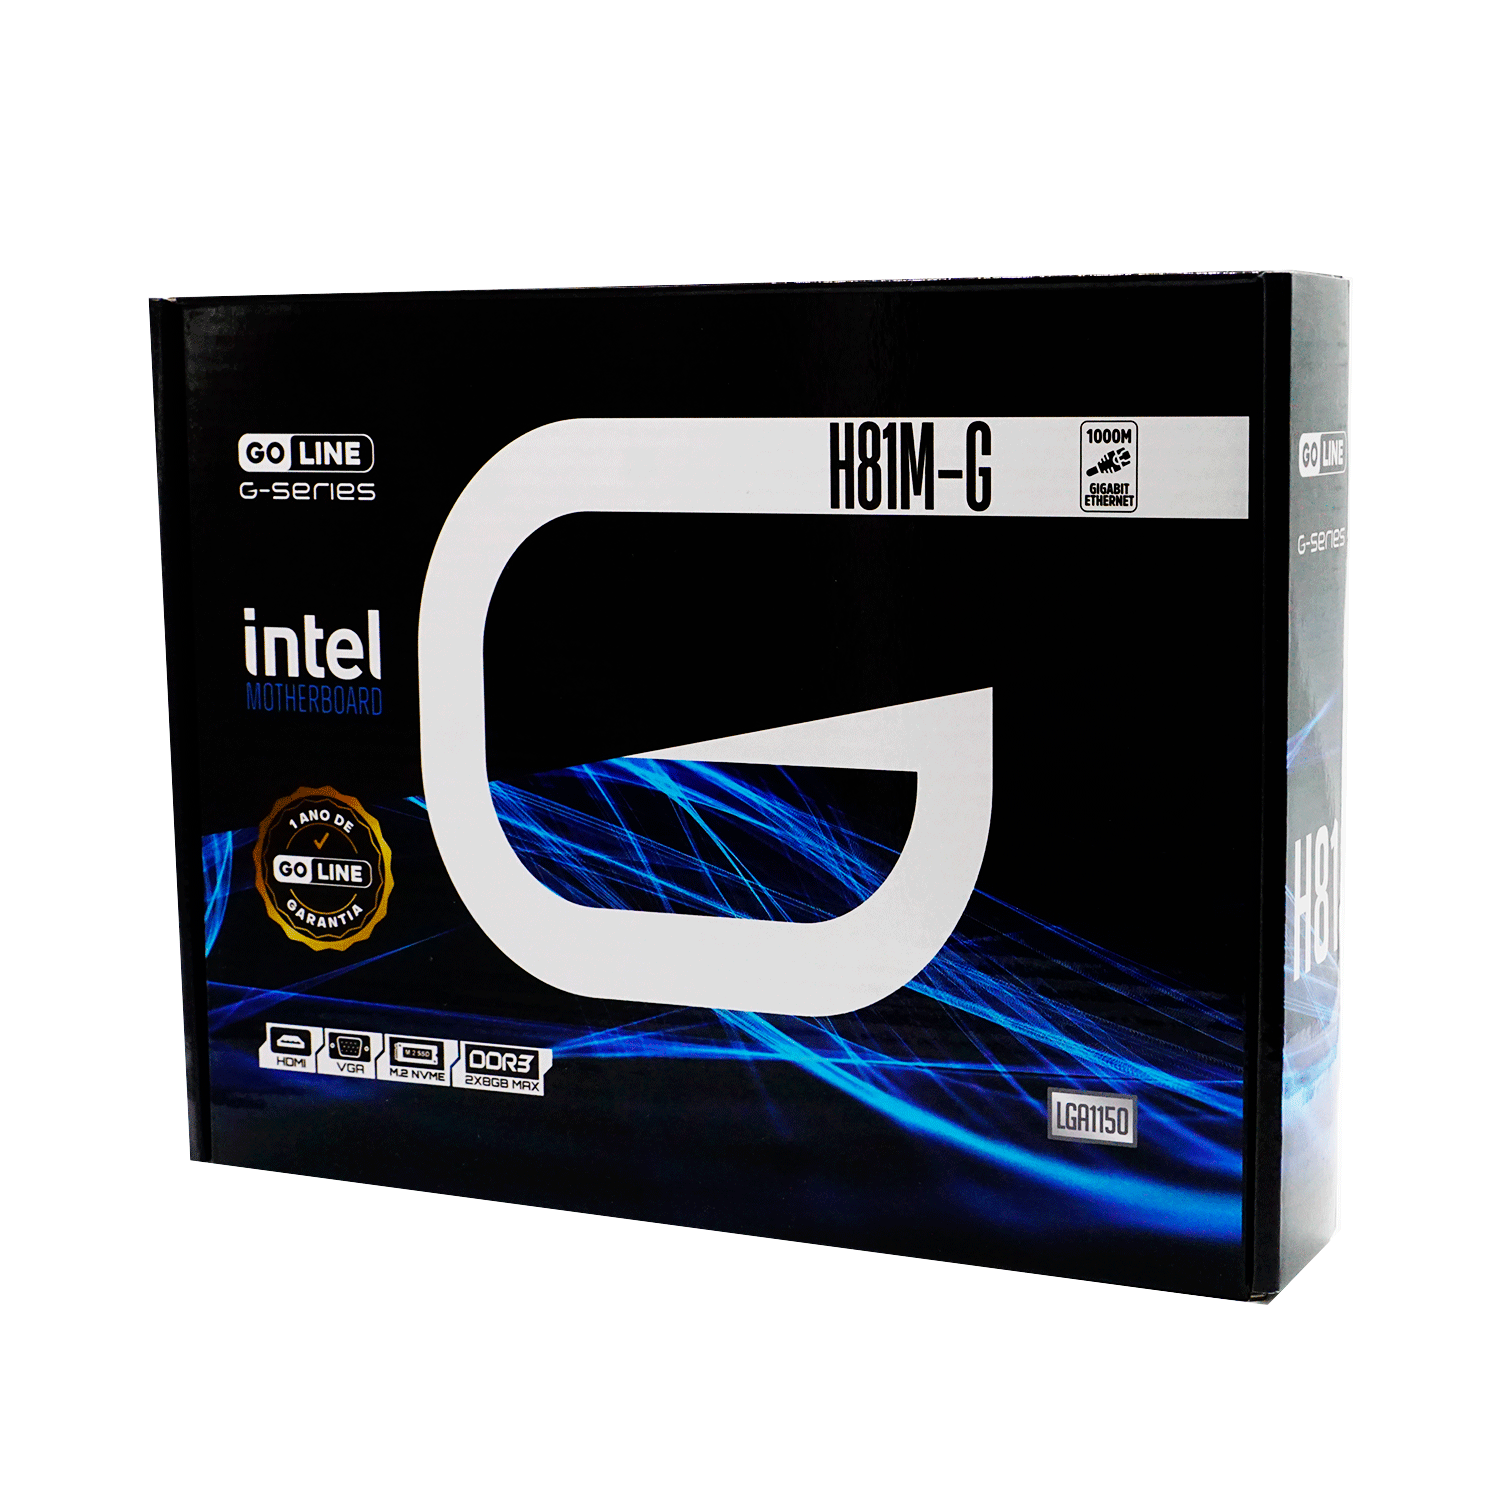 Placa Mãe Goline H81M-G Socket LGA 1150 Chipset Intel H81 DDR3 Micro ATX - (1 Ano Garantia)